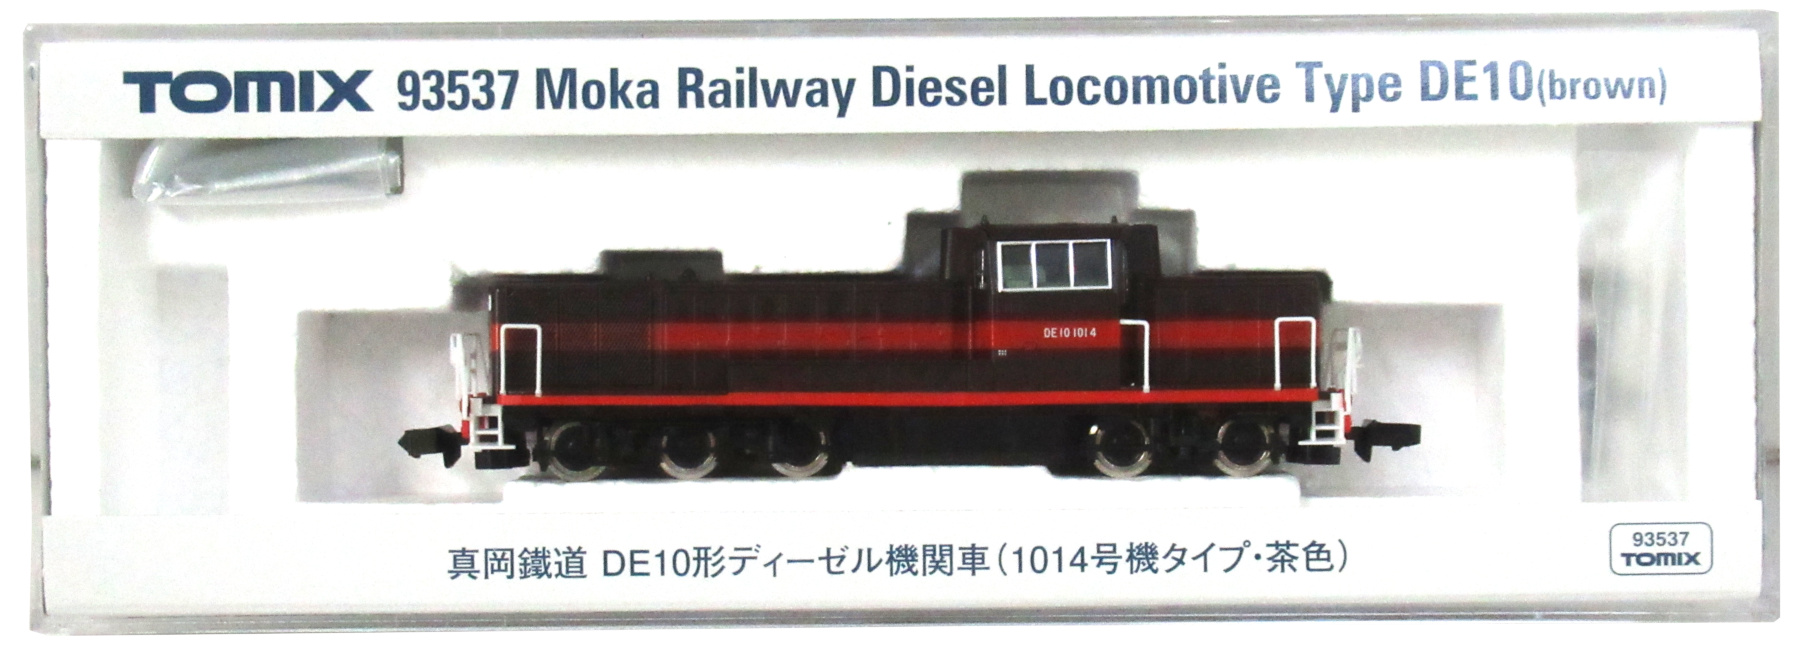 TOMIX 93537 真岡鐵道DE10形ディーゼル機関車(1014号機・茶